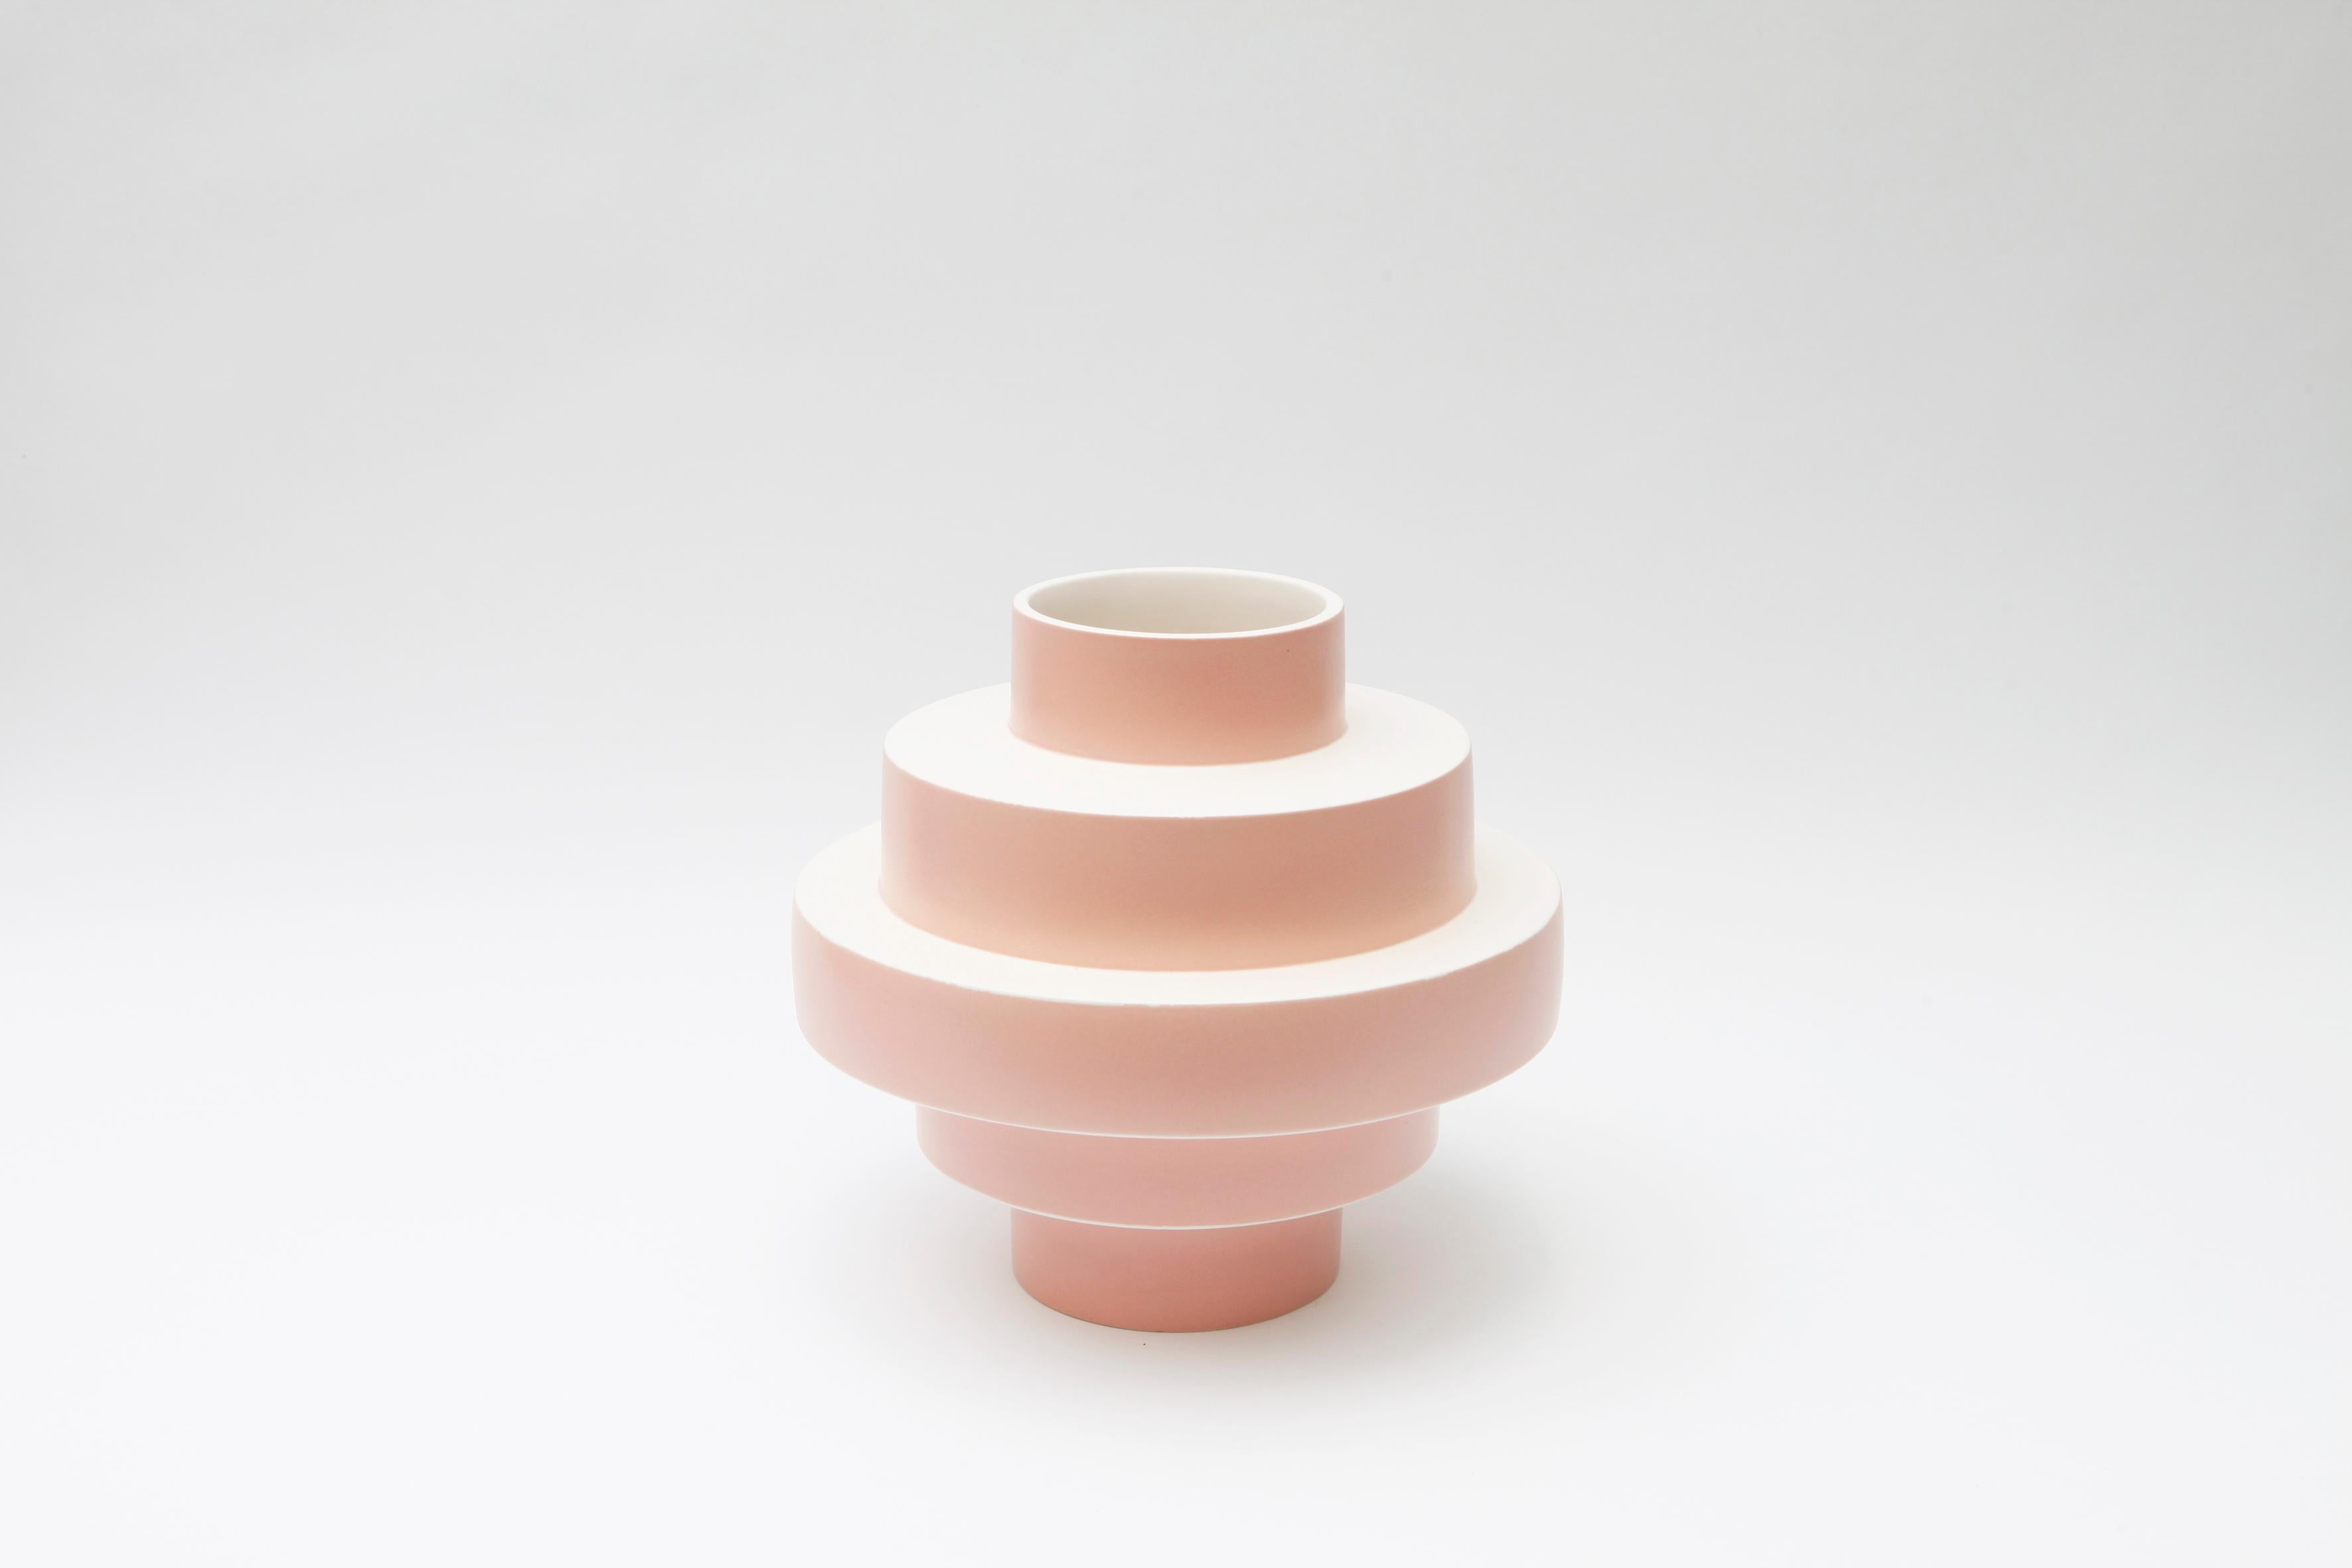 Montèe vase designed by Simona Cardinetti.

Handmade in Italy.

Materials: Ceramic.
 